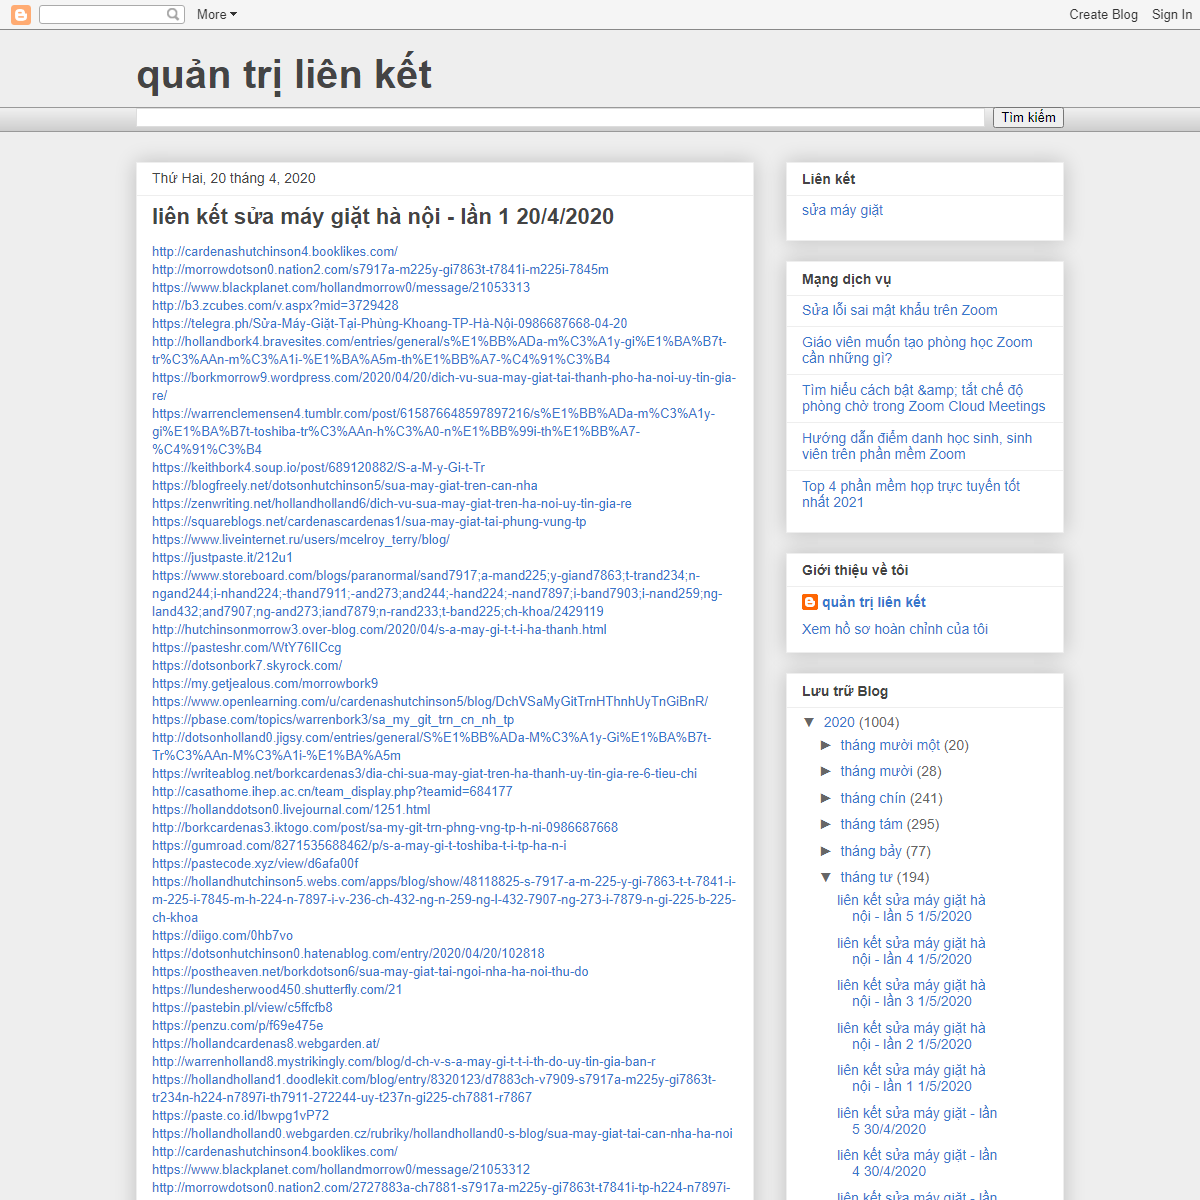 A complete backup of https://quantrilienket.blogspot.com/2020/04/lien-ket-sua-may-giat-ha-noi-lan-1_20.html